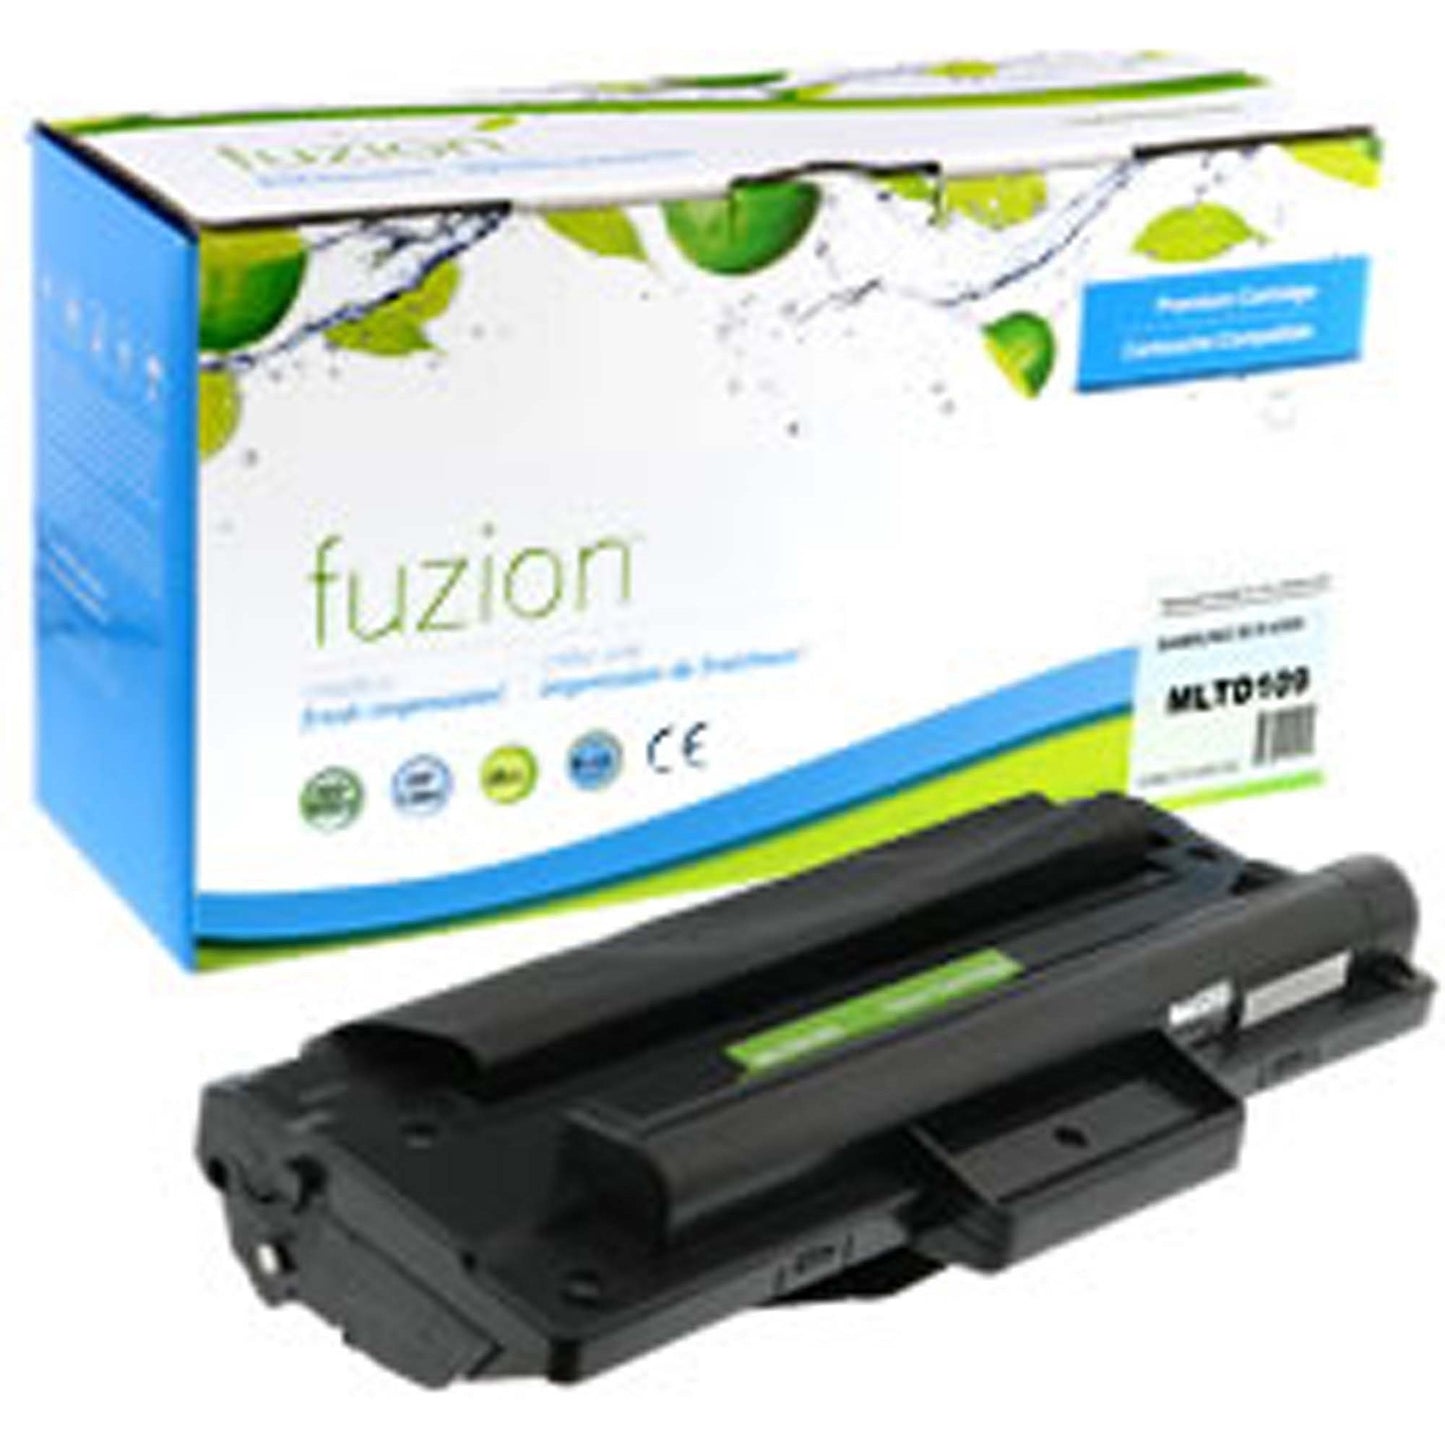 fuzion Toner Cartridge - Alternative for Samsung SCX4300 - Black